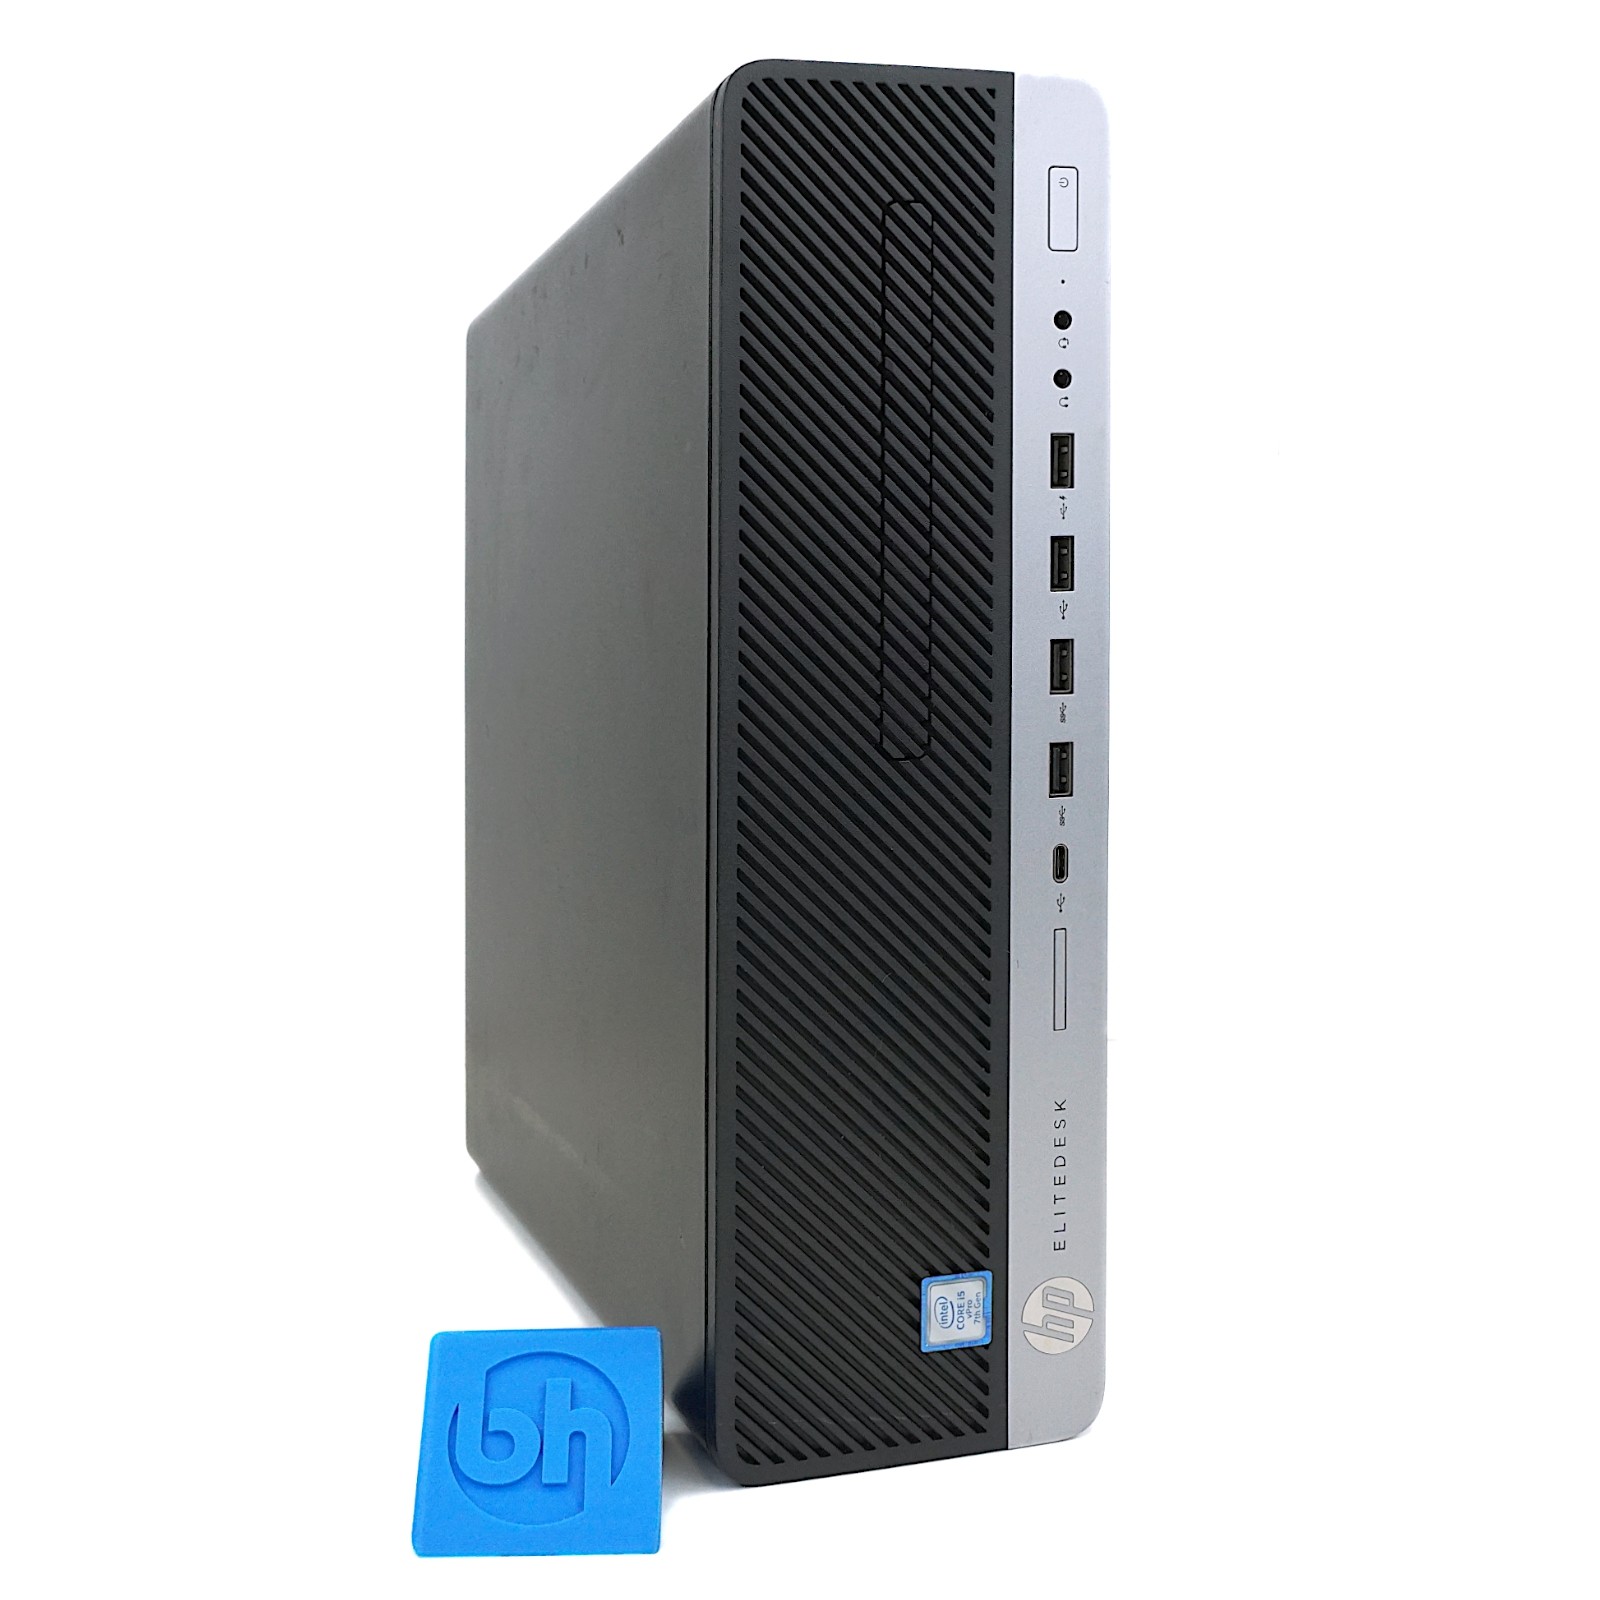 HP EliteDesk 800 G3 SFF Desktop PC Front Angle Left